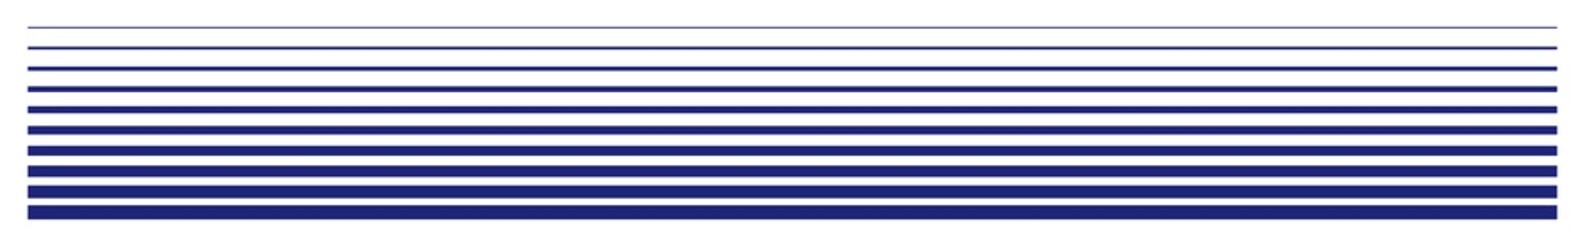 Line Icon Blue | Horizontal Solid Lines Illustration | Divider Symbol | Border Logo | Straight Dash Sign | Isolated | Variations